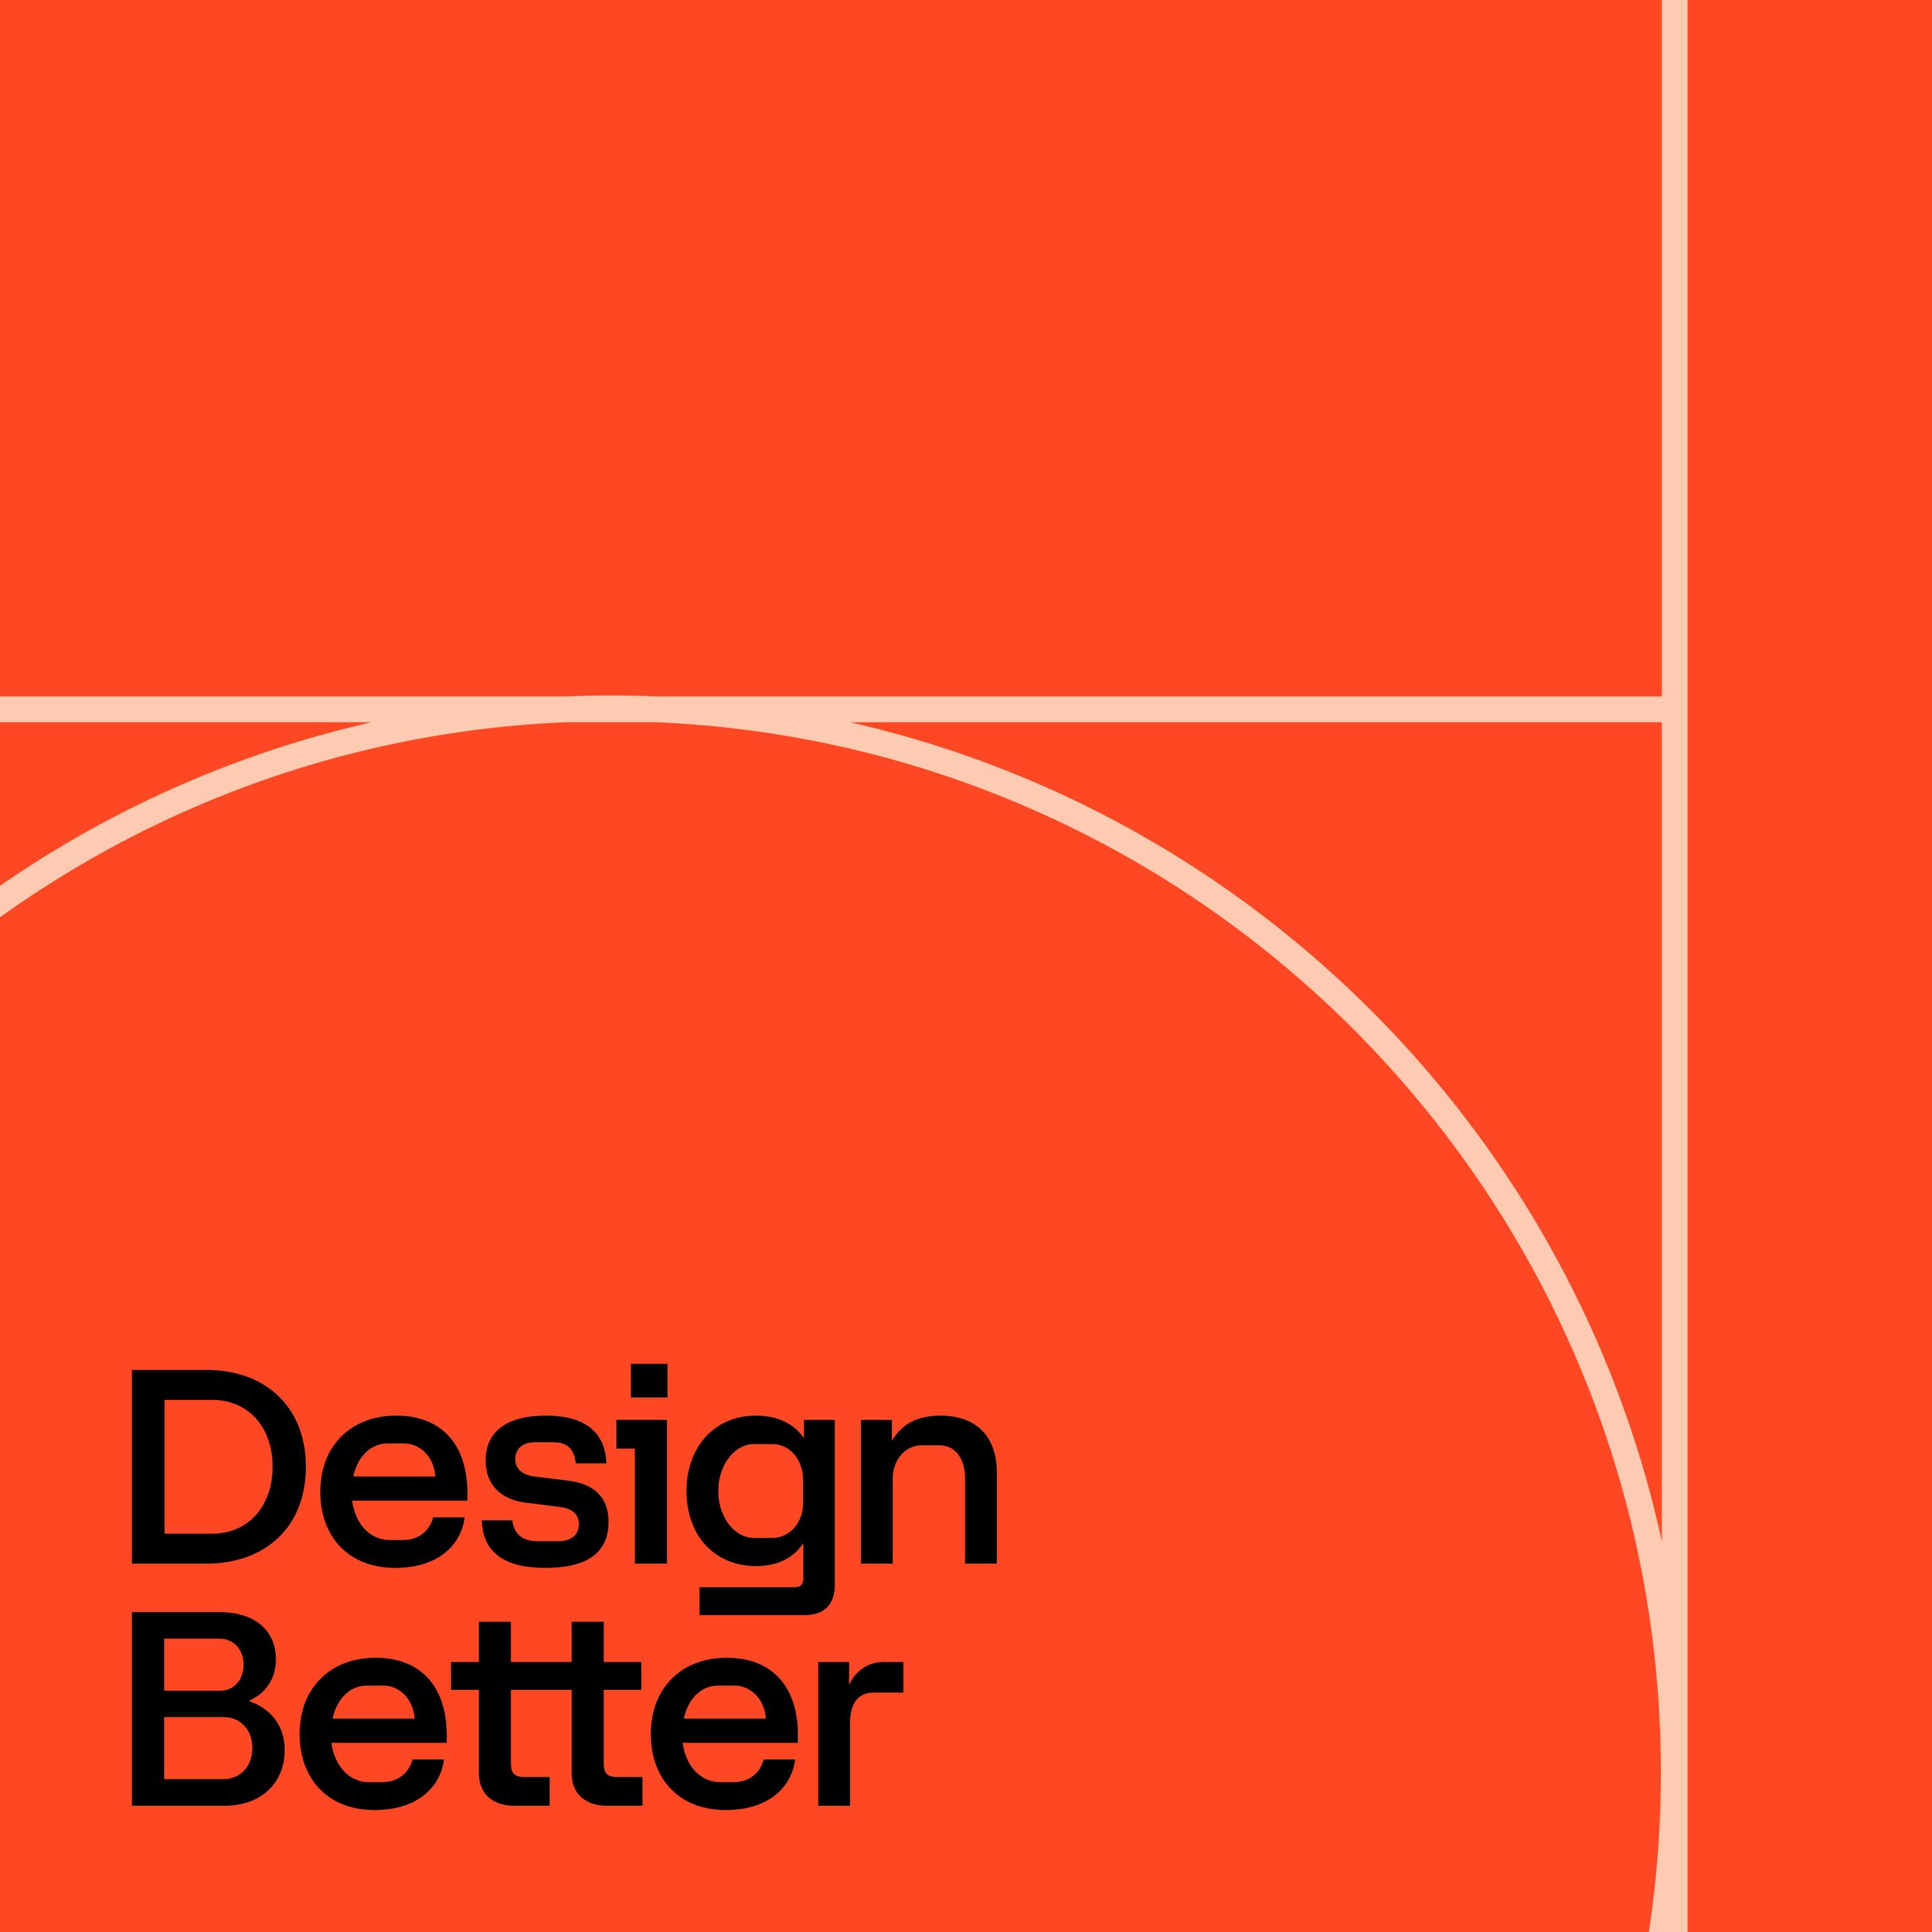 Scott Berkun: How design makes the world